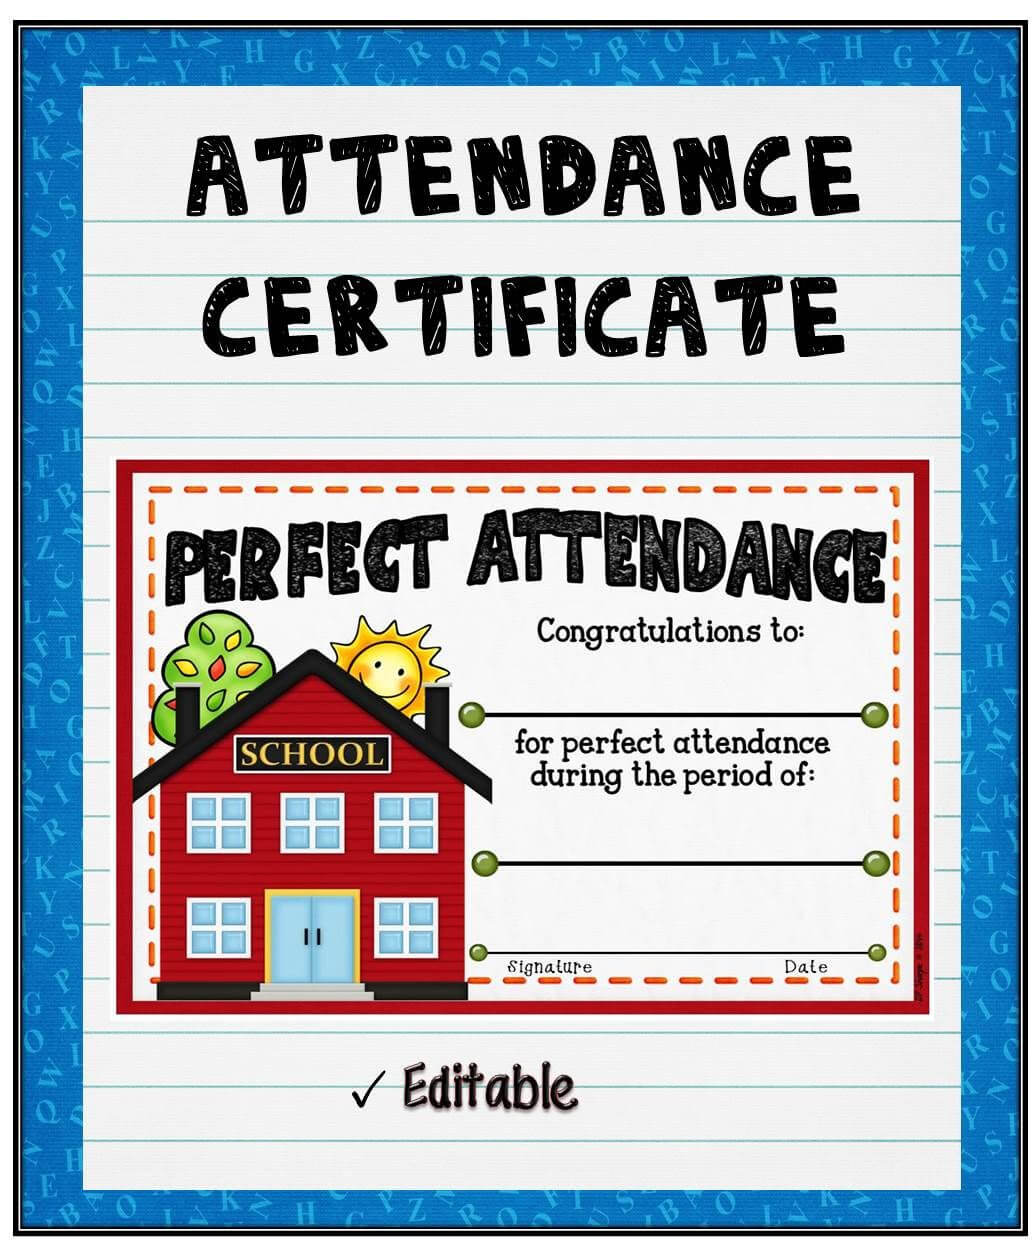 Attendance Certificate 1 {Fillable} | Attendance Certificate With Perfect Attendance Certificate Free Template